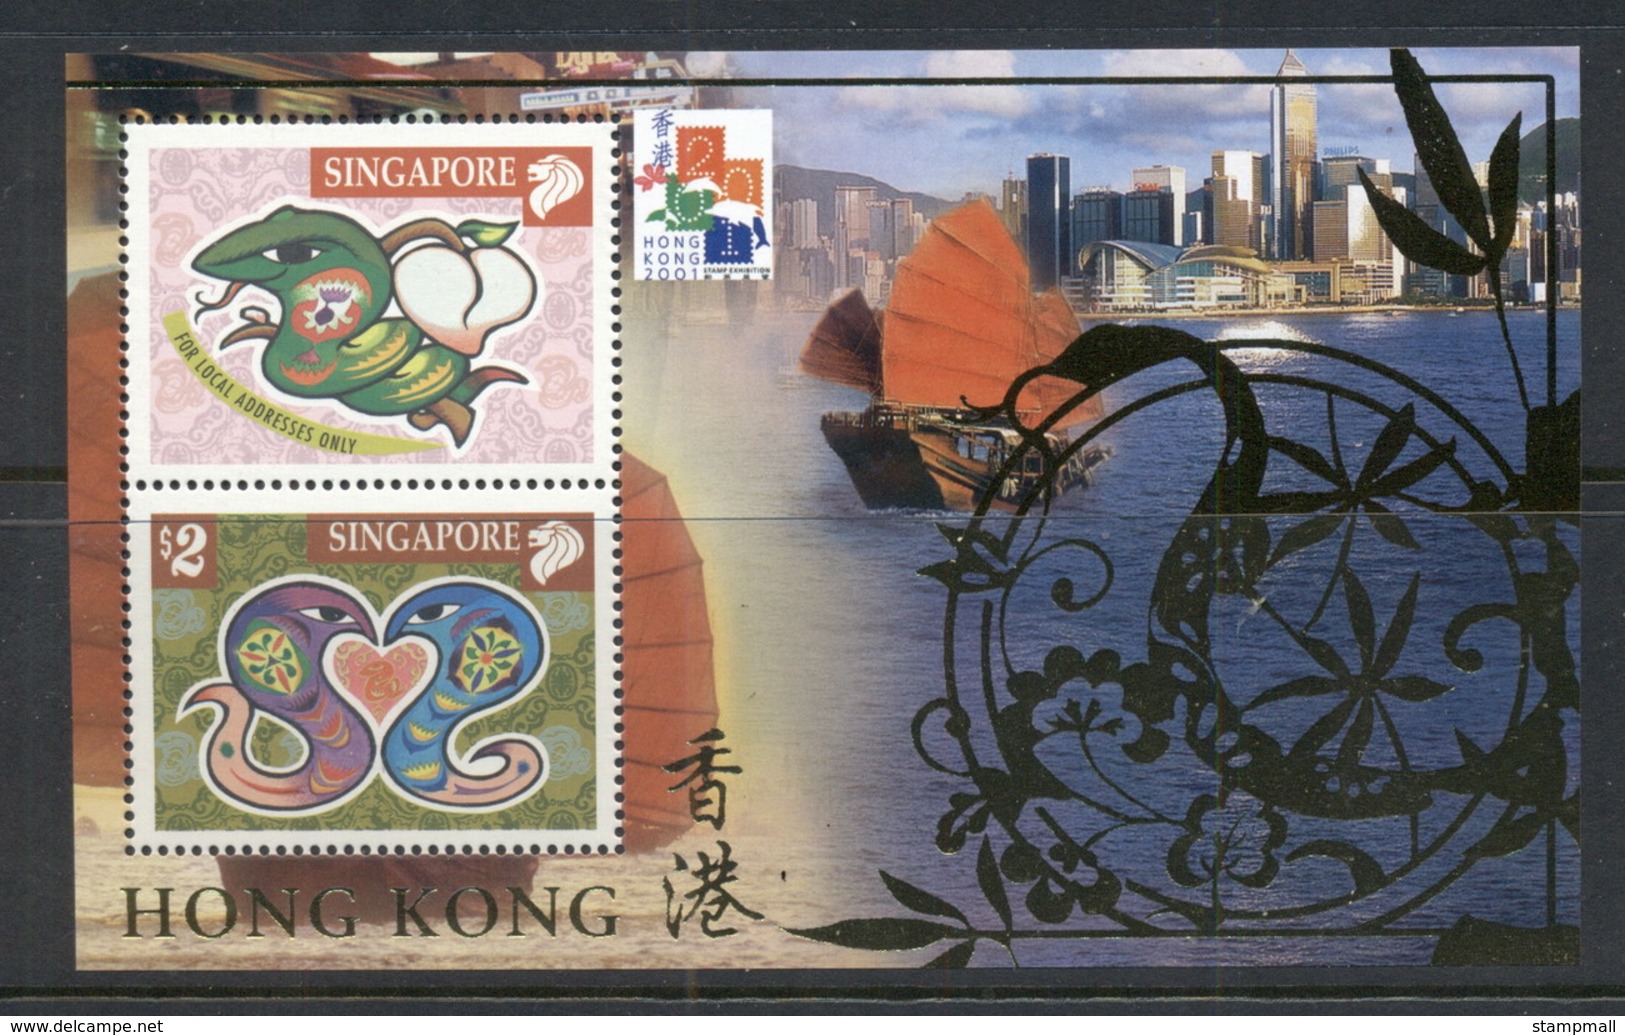 Singapore 2001 New Year Of The Snake Hong Kong MS MUH - Singapore (1959-...)